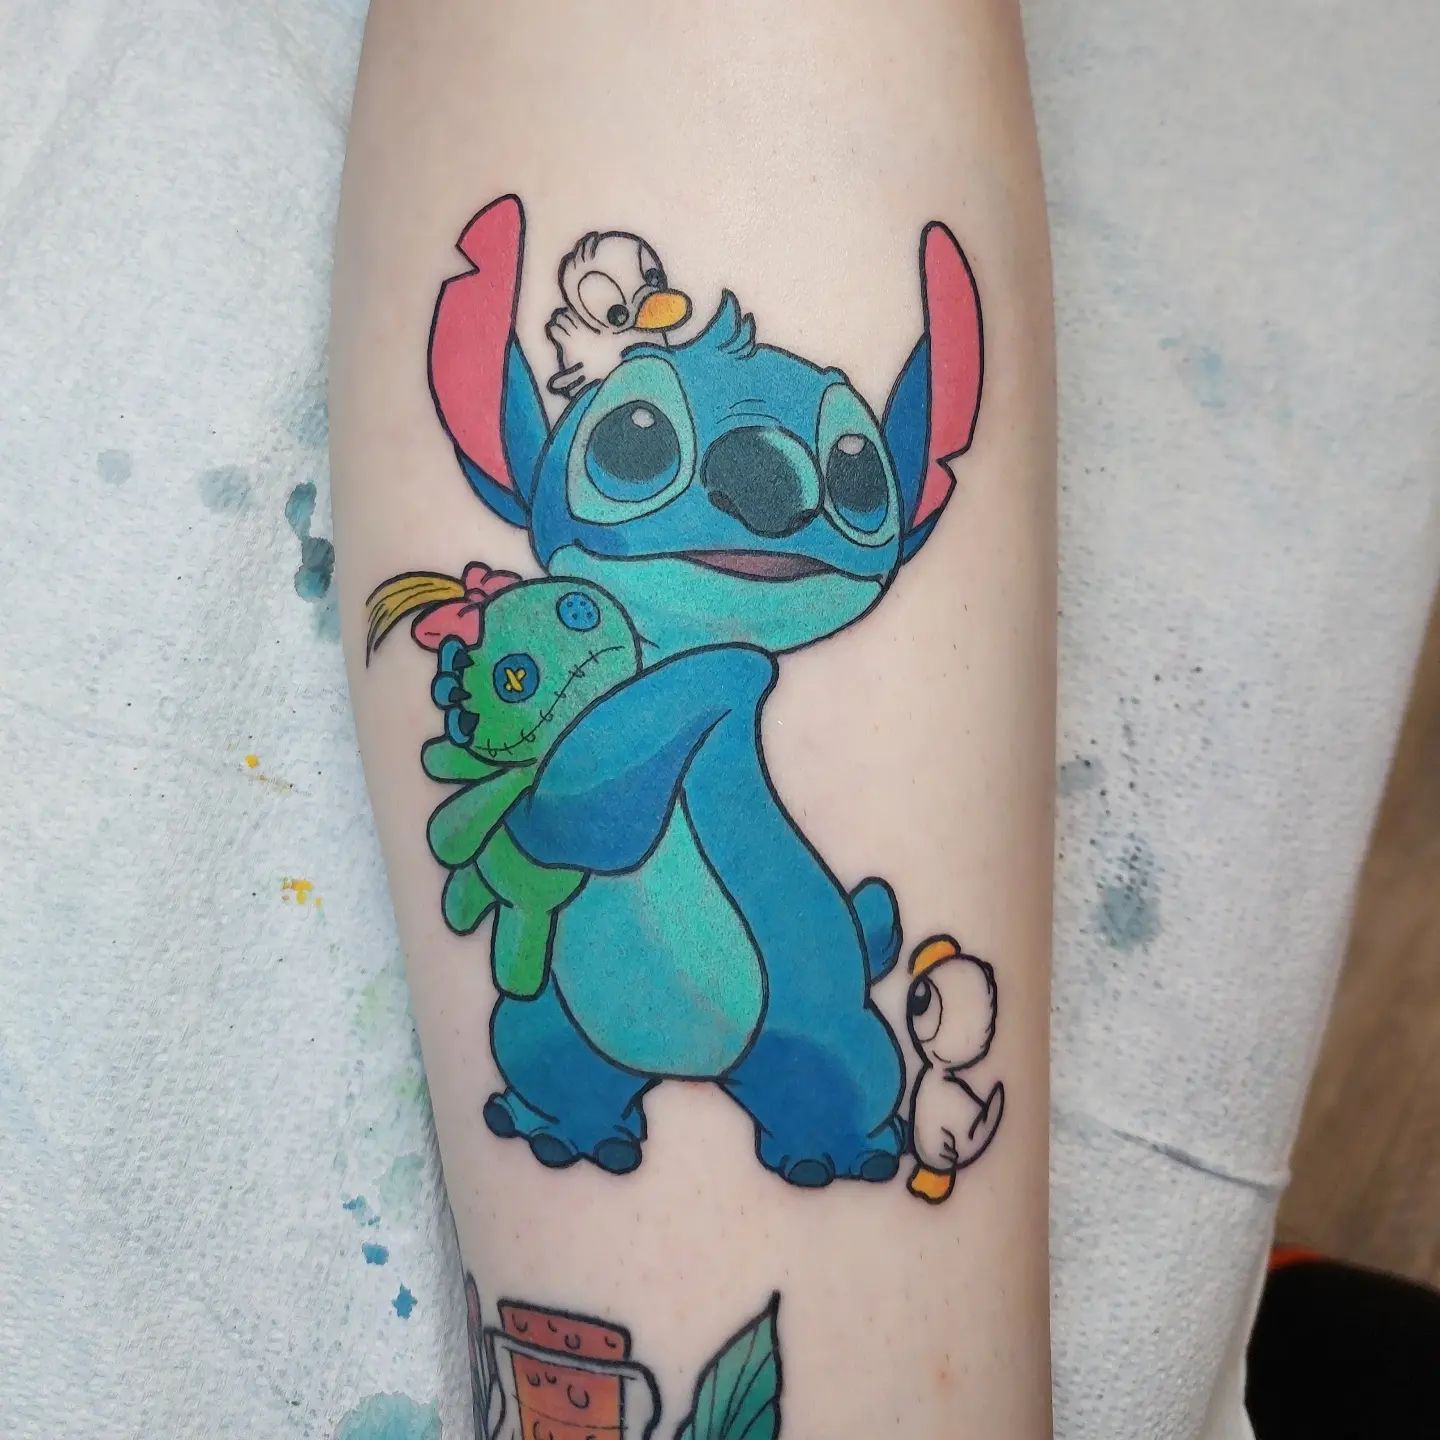 Tatuaje lindo de dibujo animado de Stitch